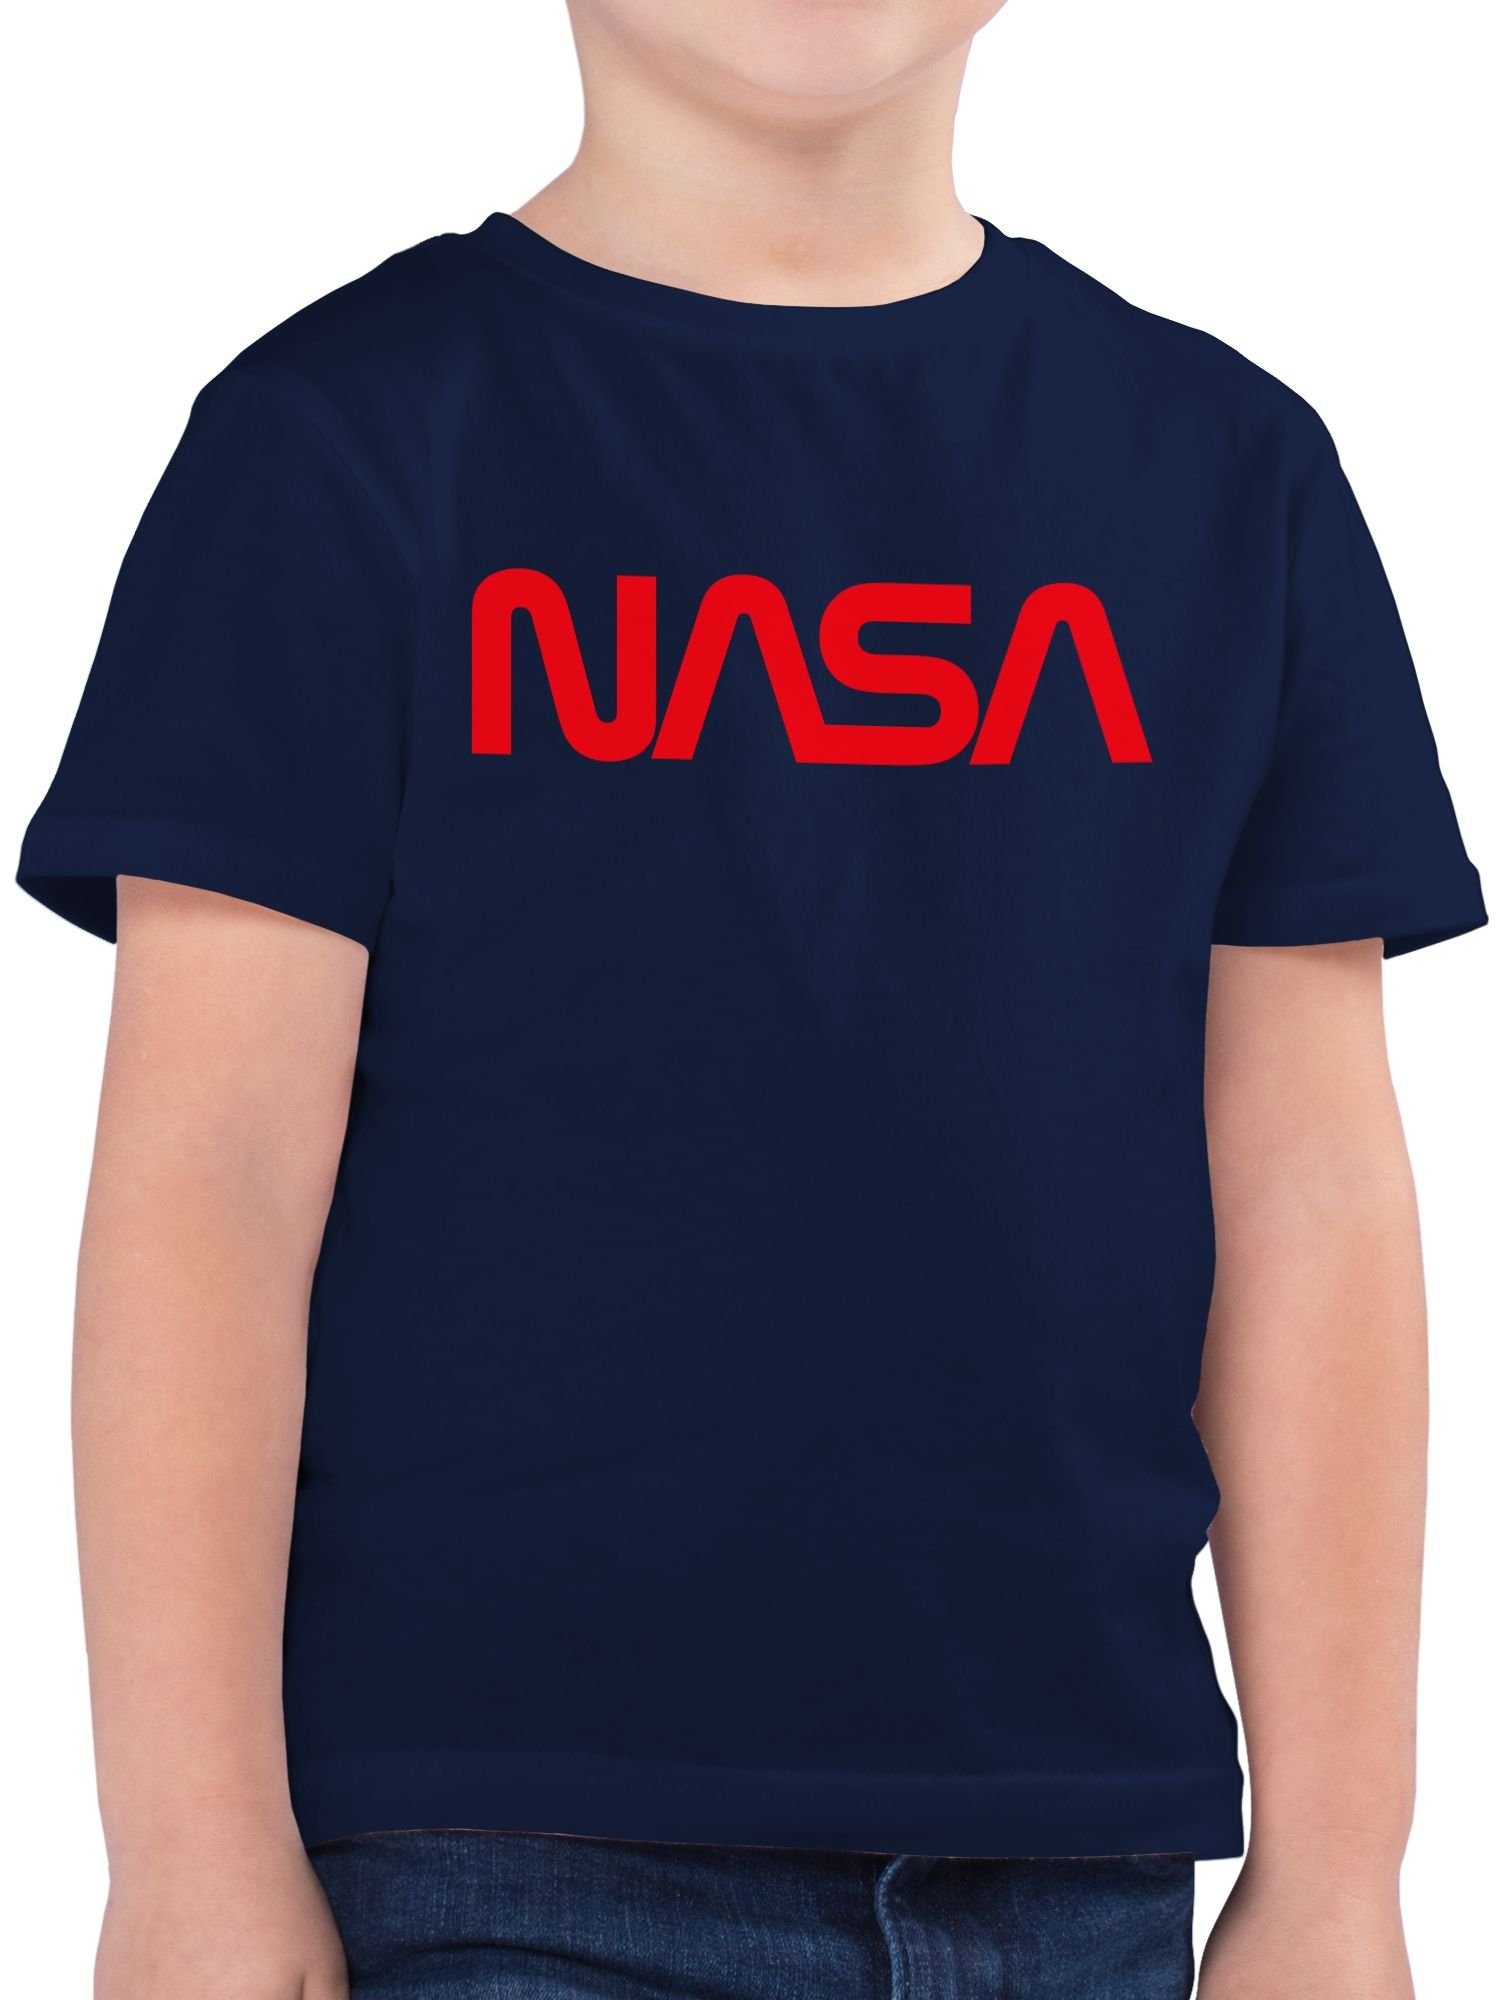 Shirtracer T-Shirt Nasa - Raumfahrt Astronaut Mondlandung Weltraum Kinderkleidung und Co 1 Dunkelblau